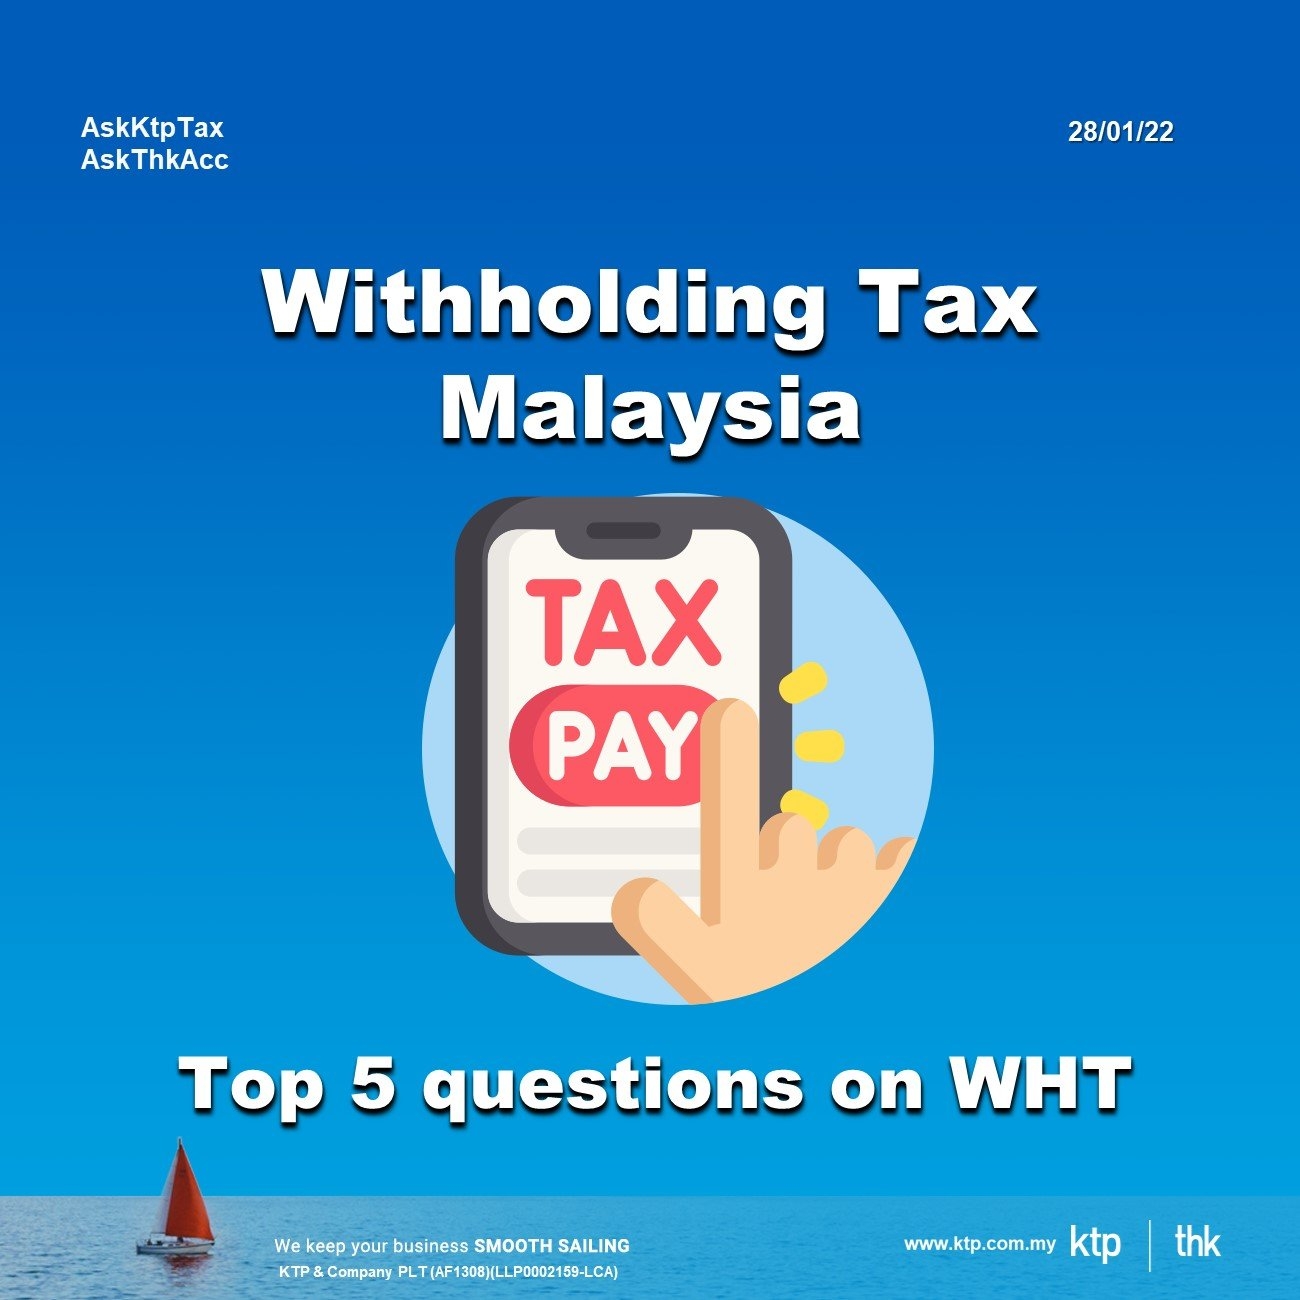 withholding-tax-malaysia-2022-jan-28-2022-johor-bahru-jb